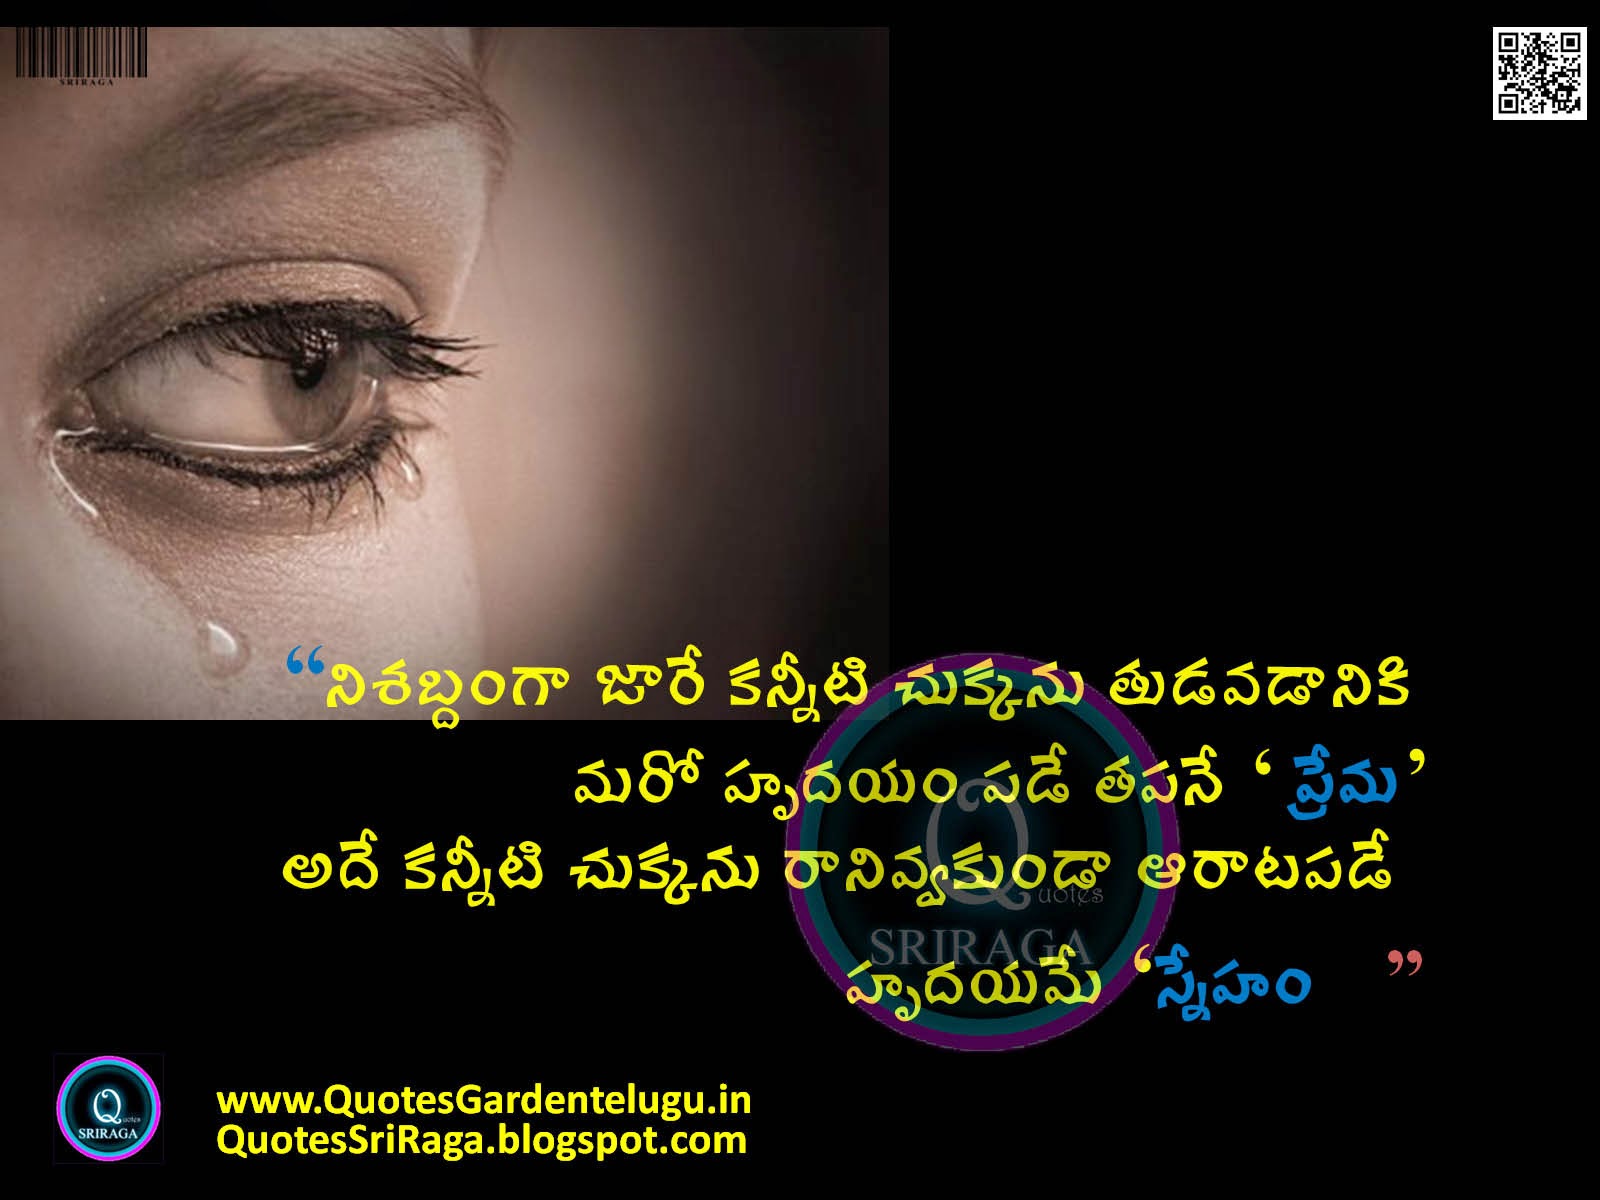 Quotes Of Friendship In Telugu - o monte terror